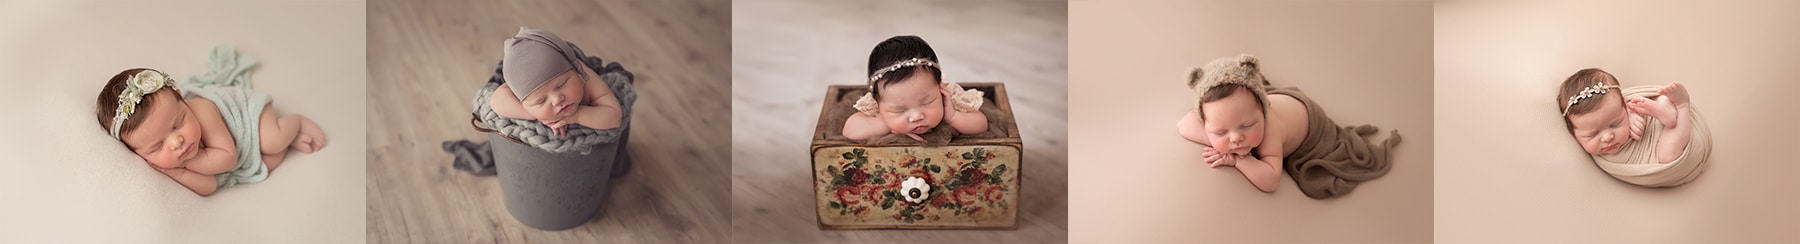 WORKSHOP NEWBORN PETIT MONDE KRISTINA RECHE FOTOGRAFIA 600 - Newborn